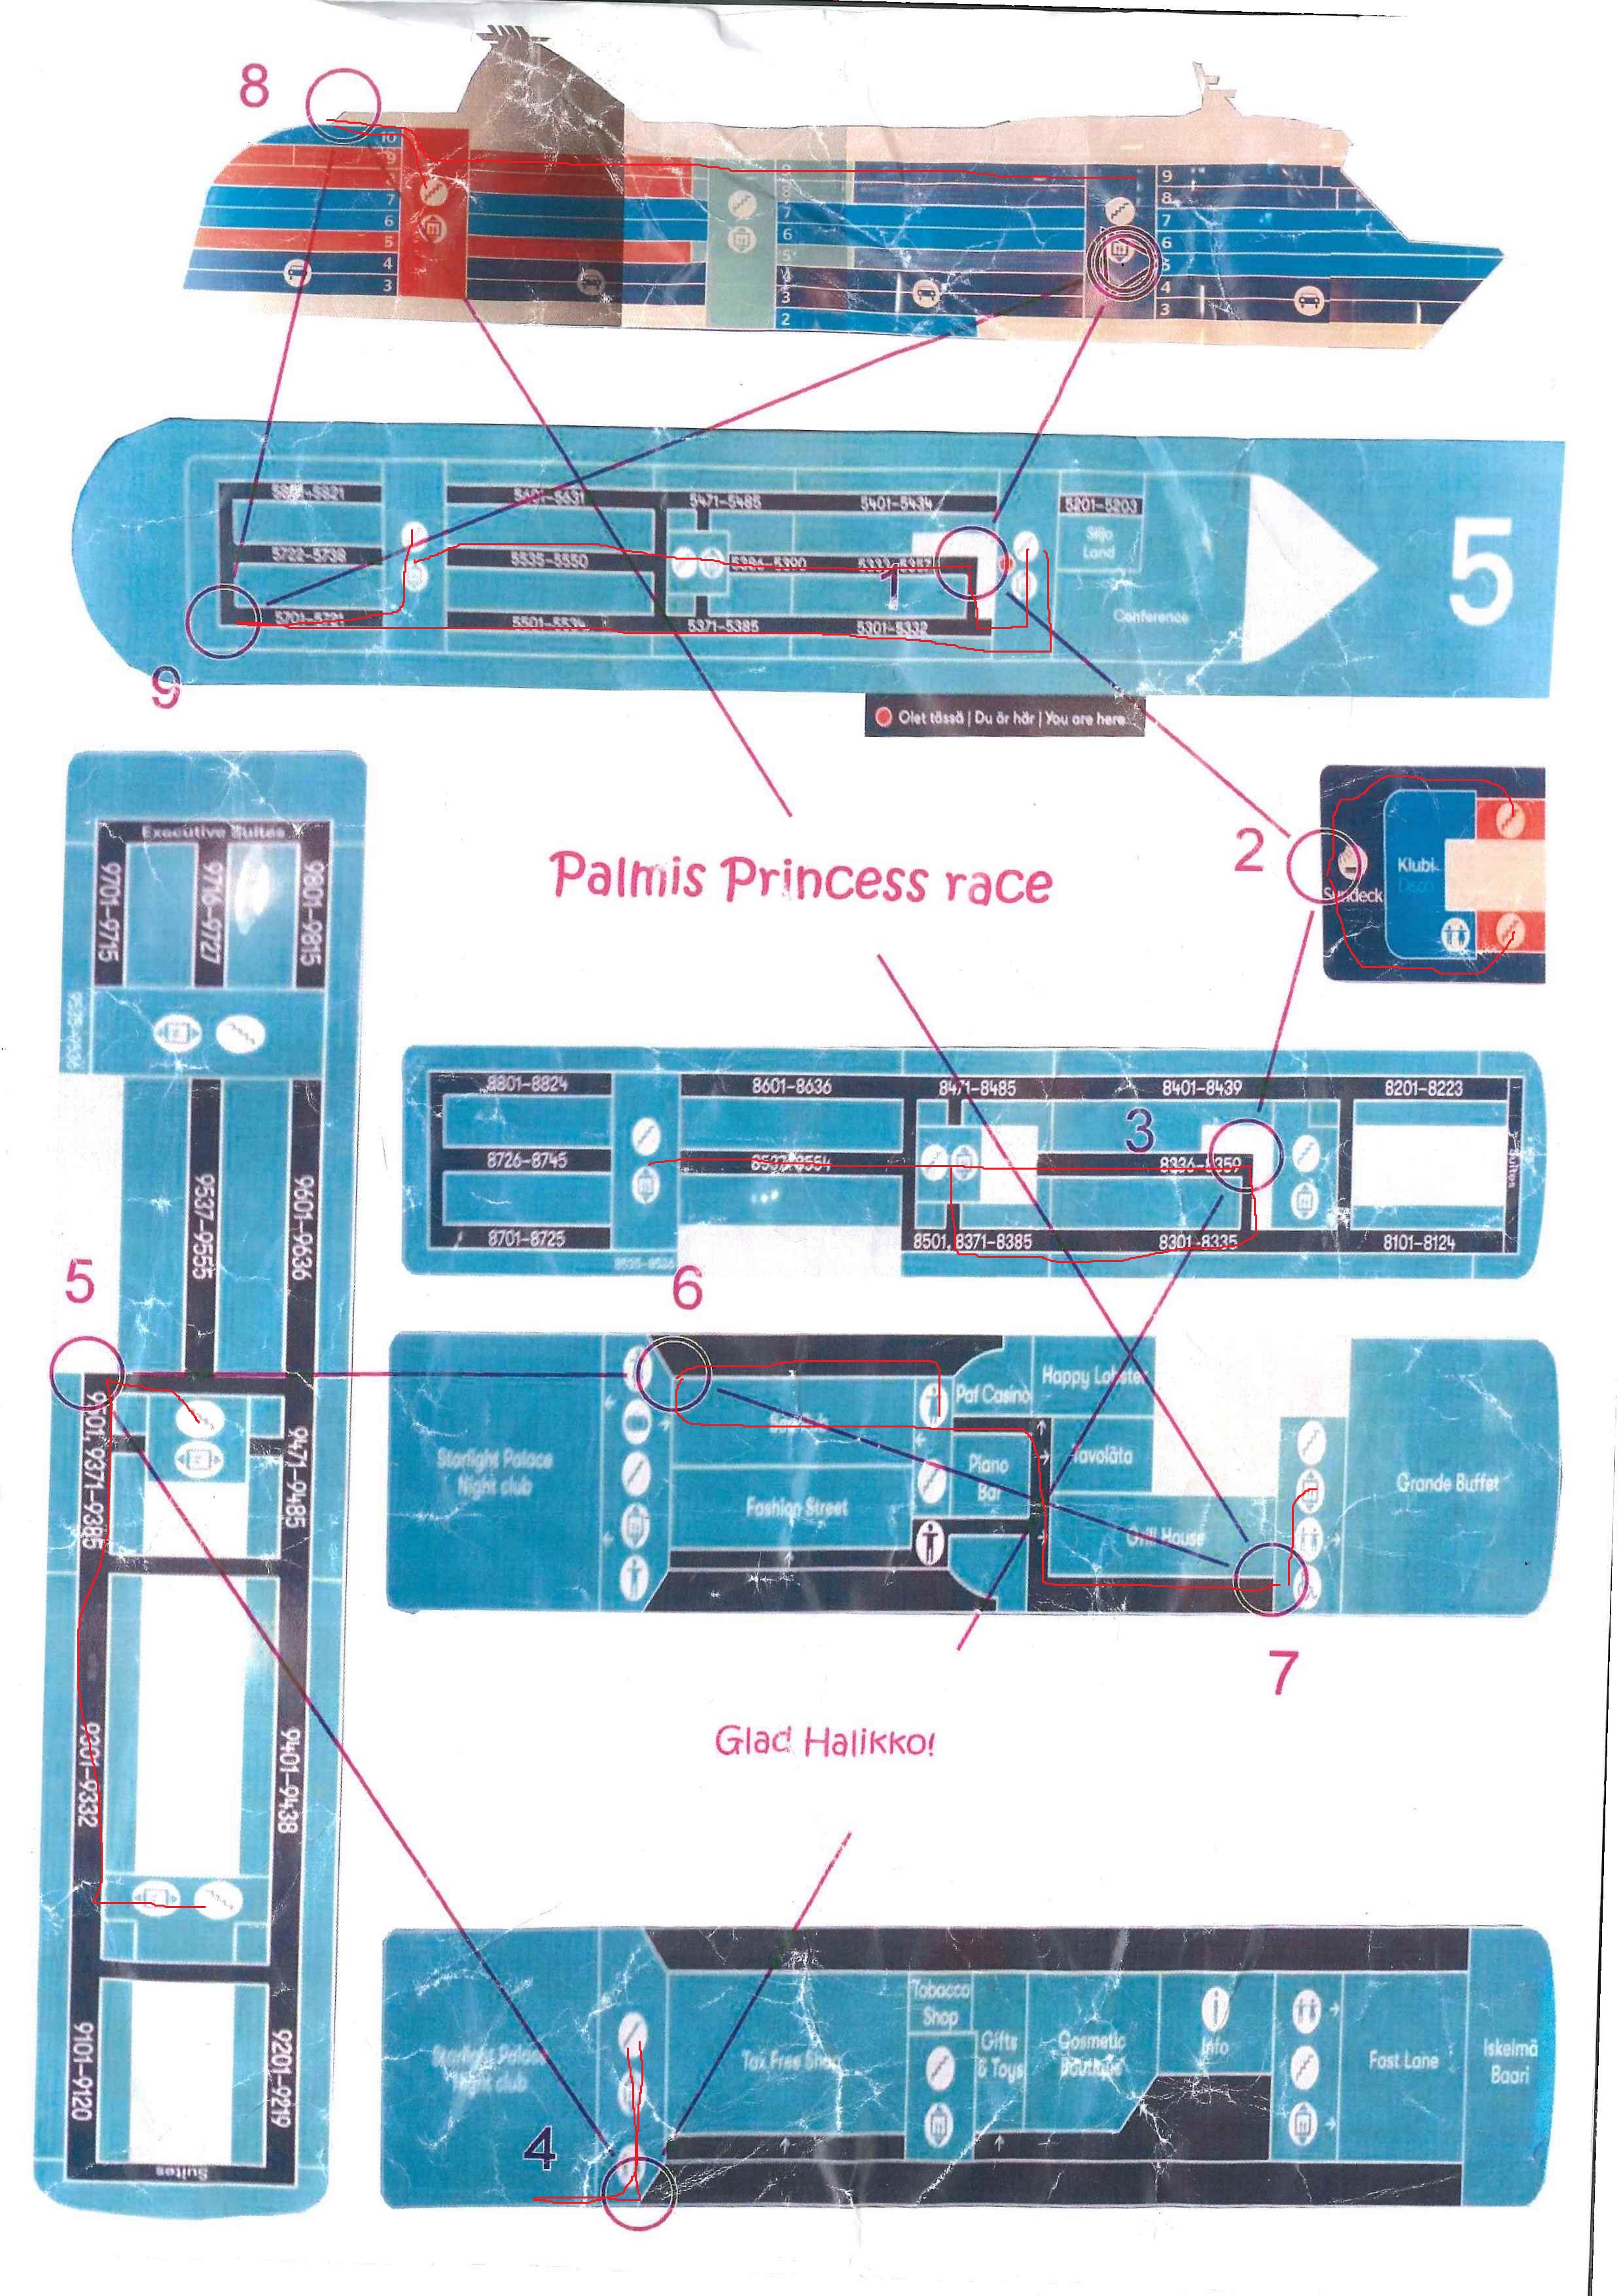 Palmis Princess race by Pasta20 (13.10.2018)